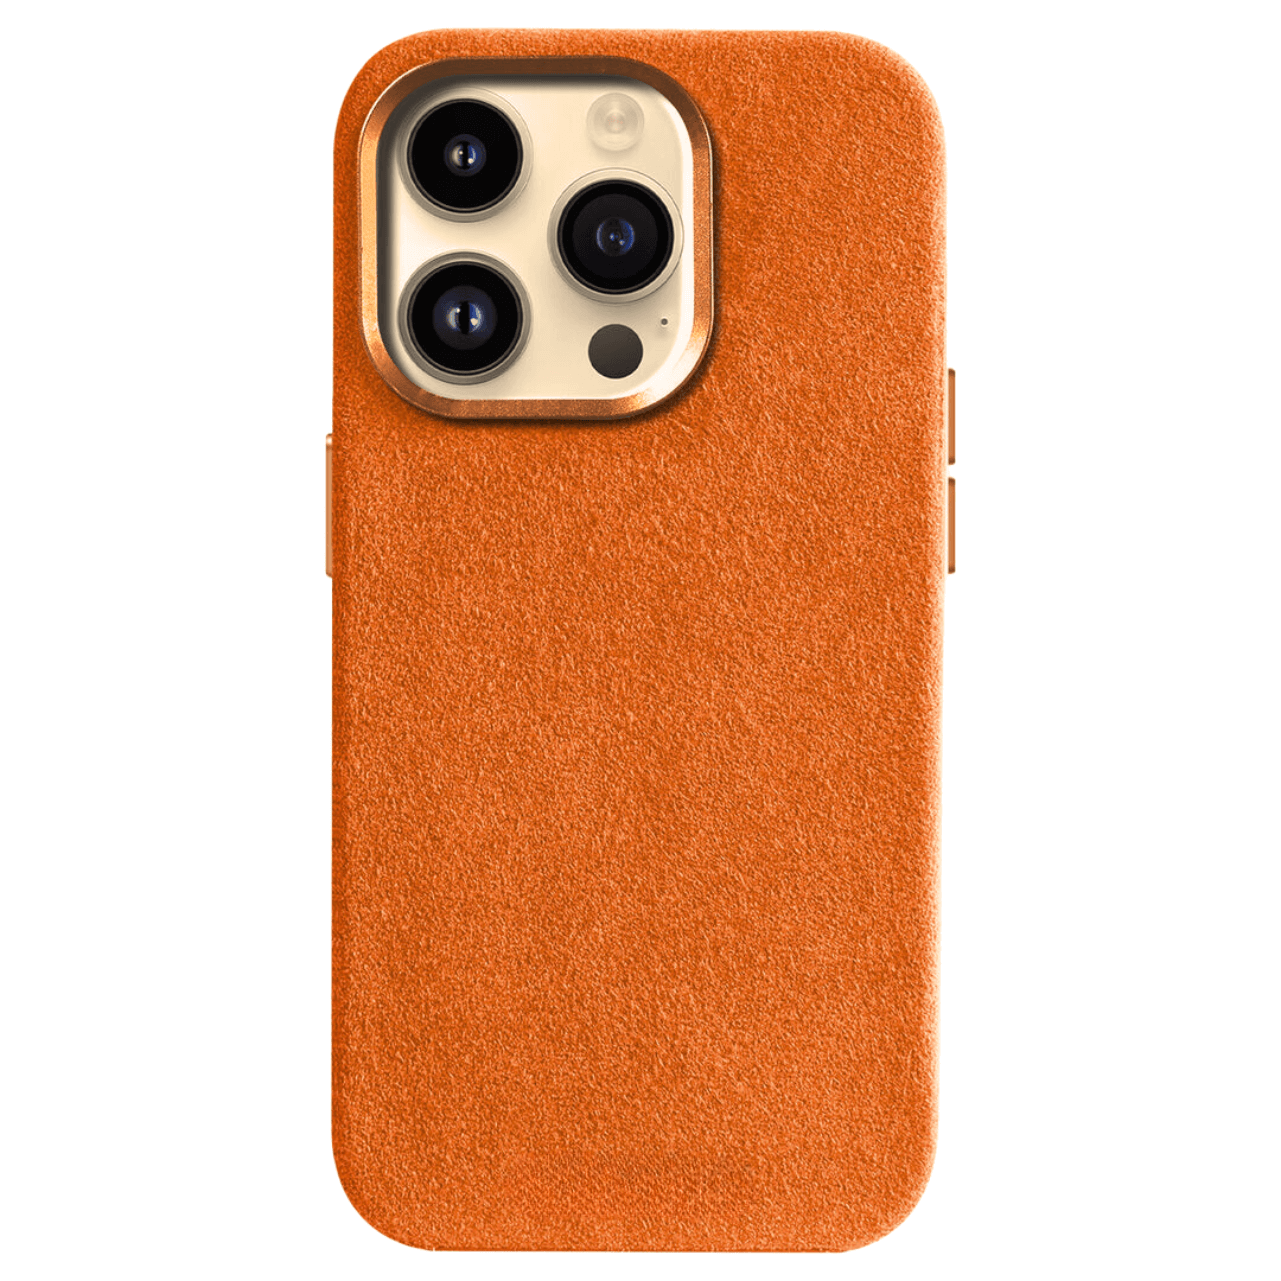 Alcantara Case - Orange Edition